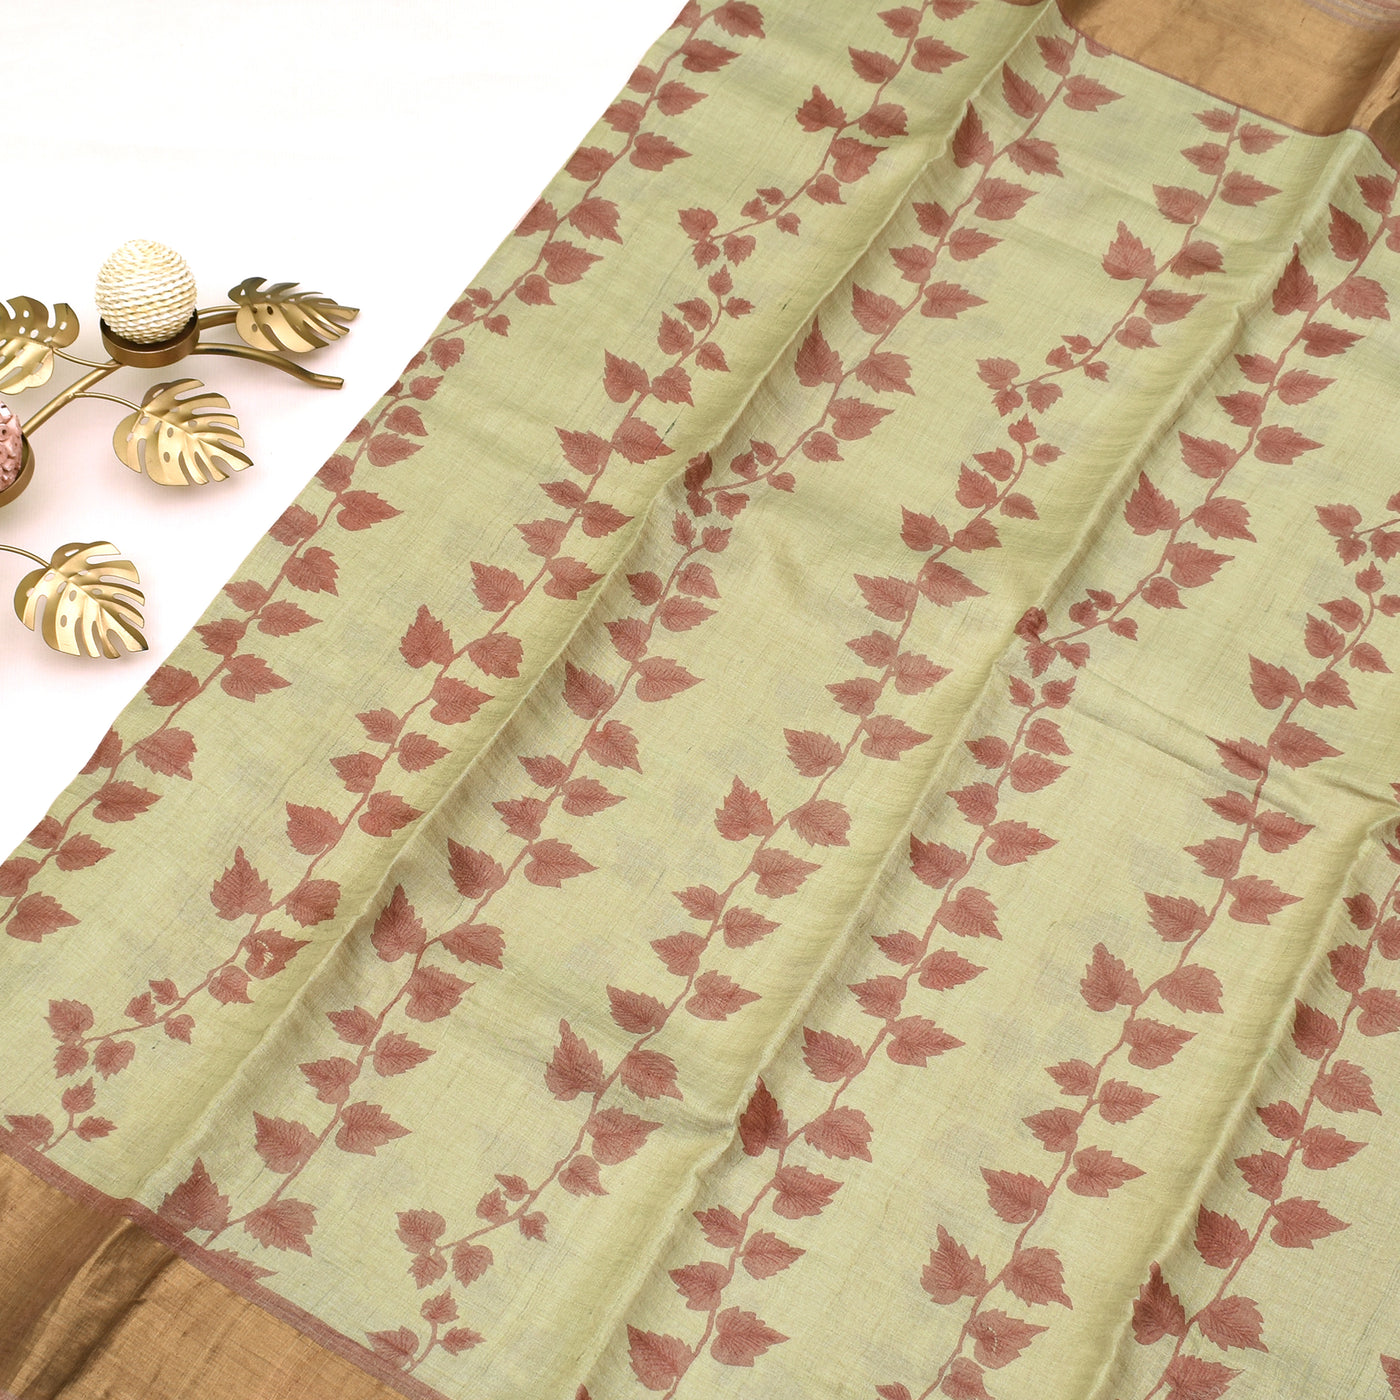 Off White Tussar Printed Saree with Leaf Creeper Design